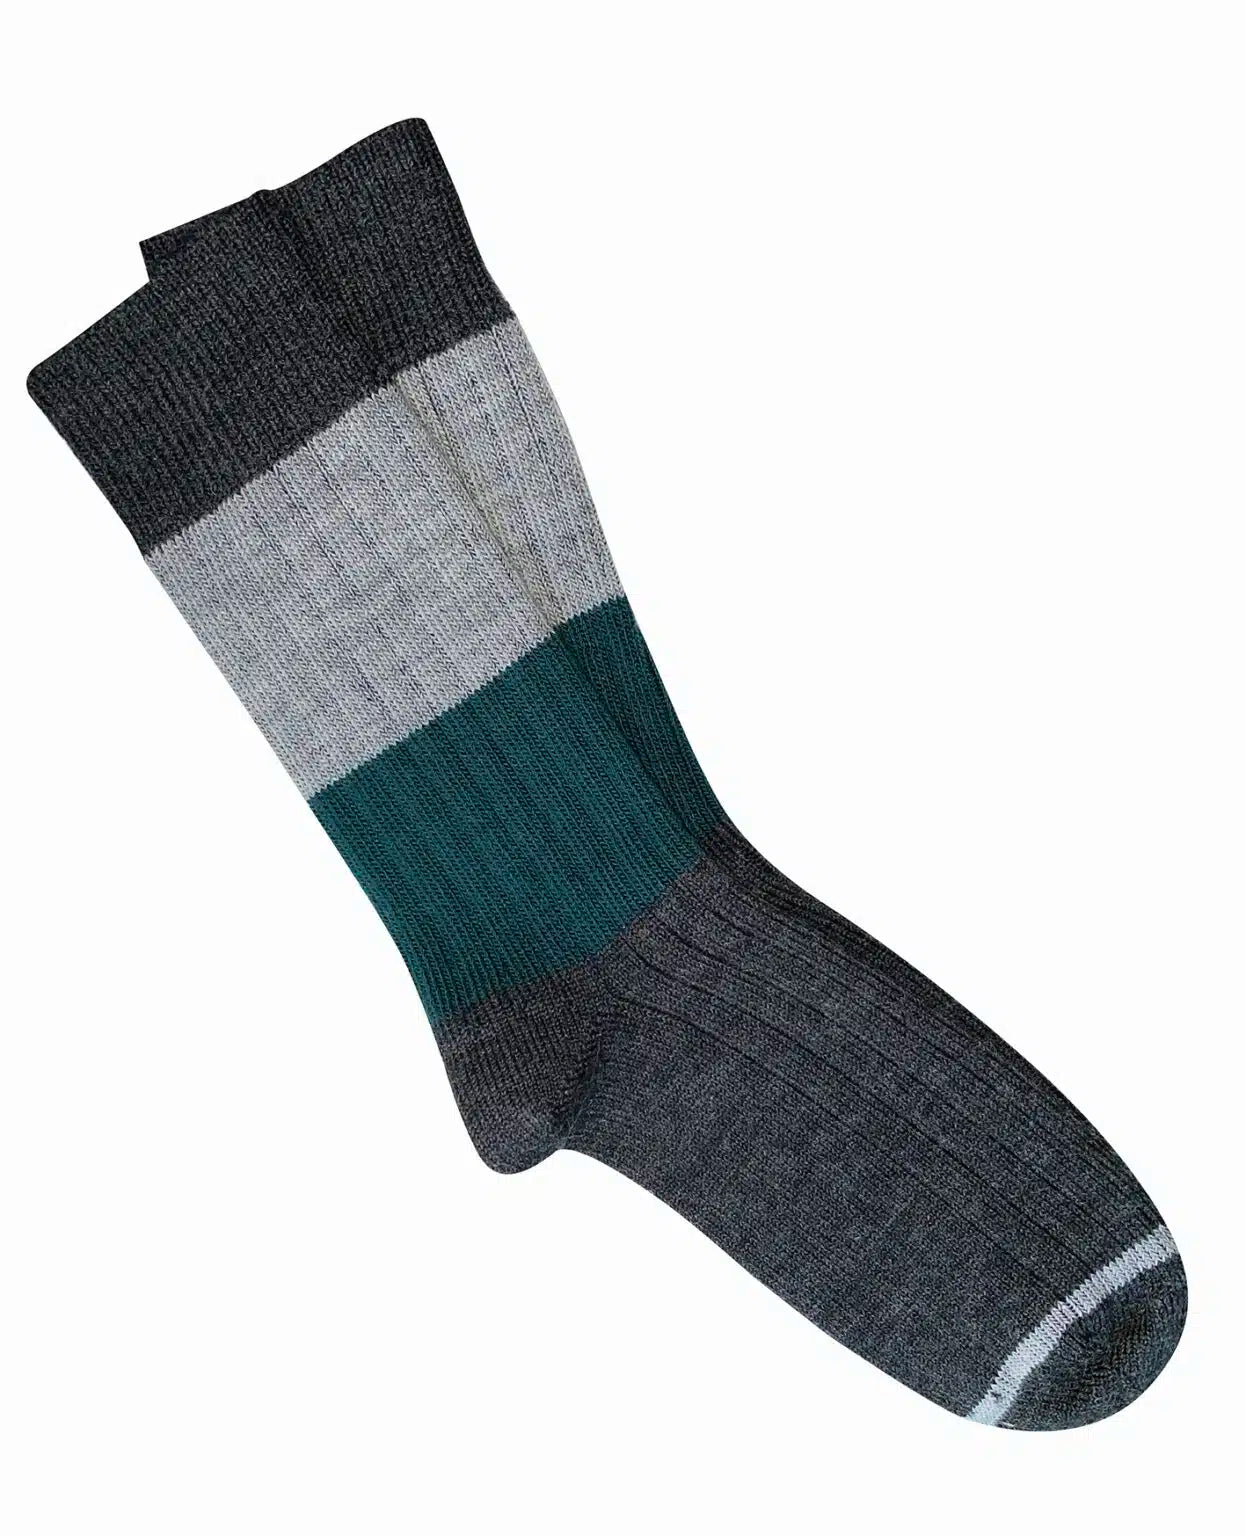 Tightology ‘Chunky Rib’ Charcoal Stripe Merino Wool Socks